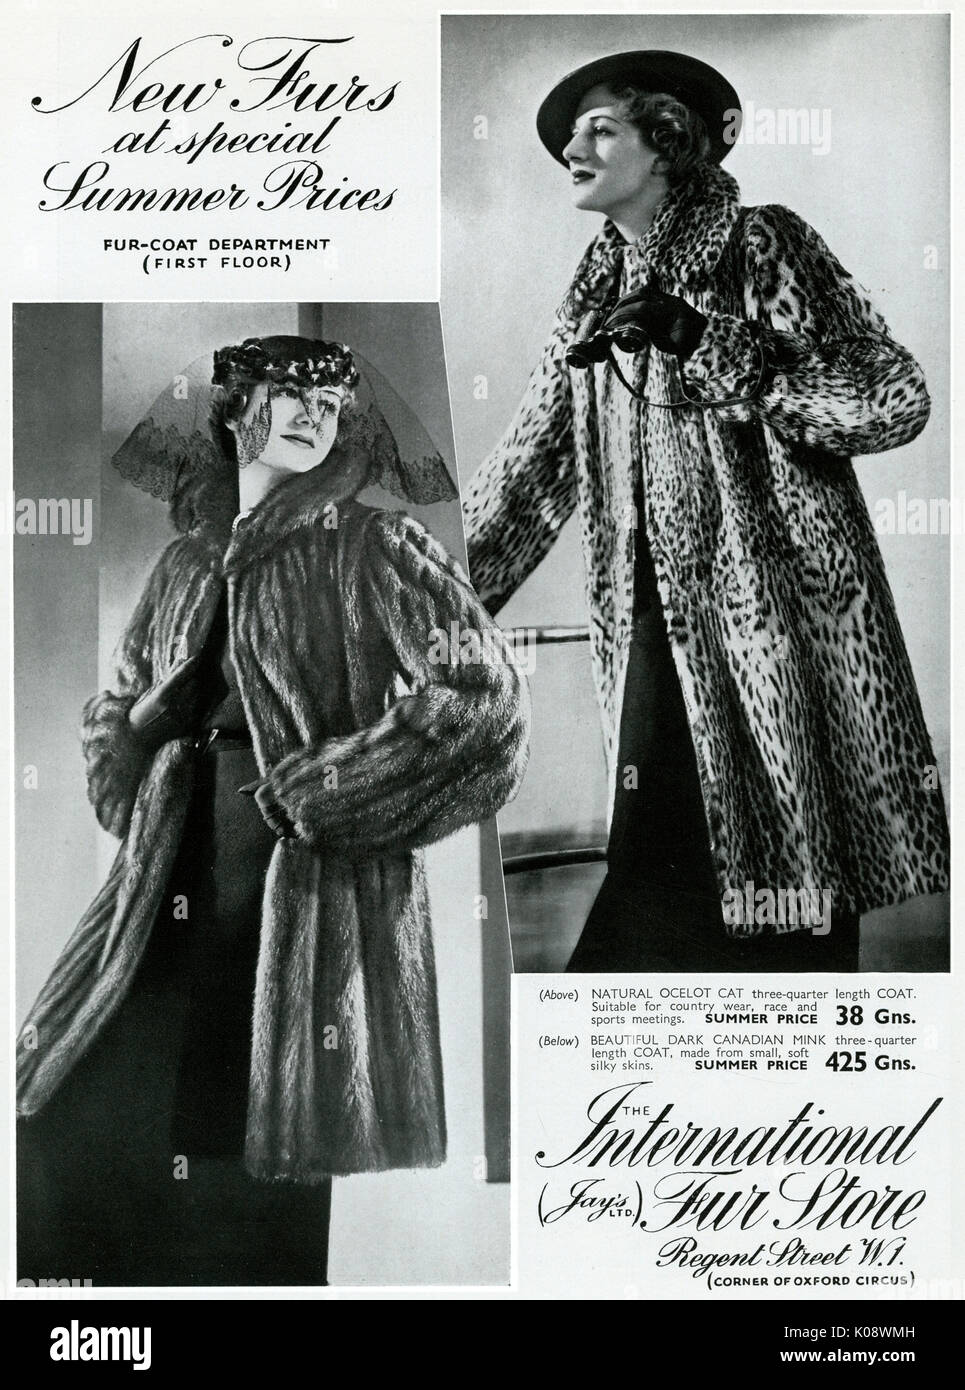 Pubblicità per International Fur Store 1937 Foto Stock